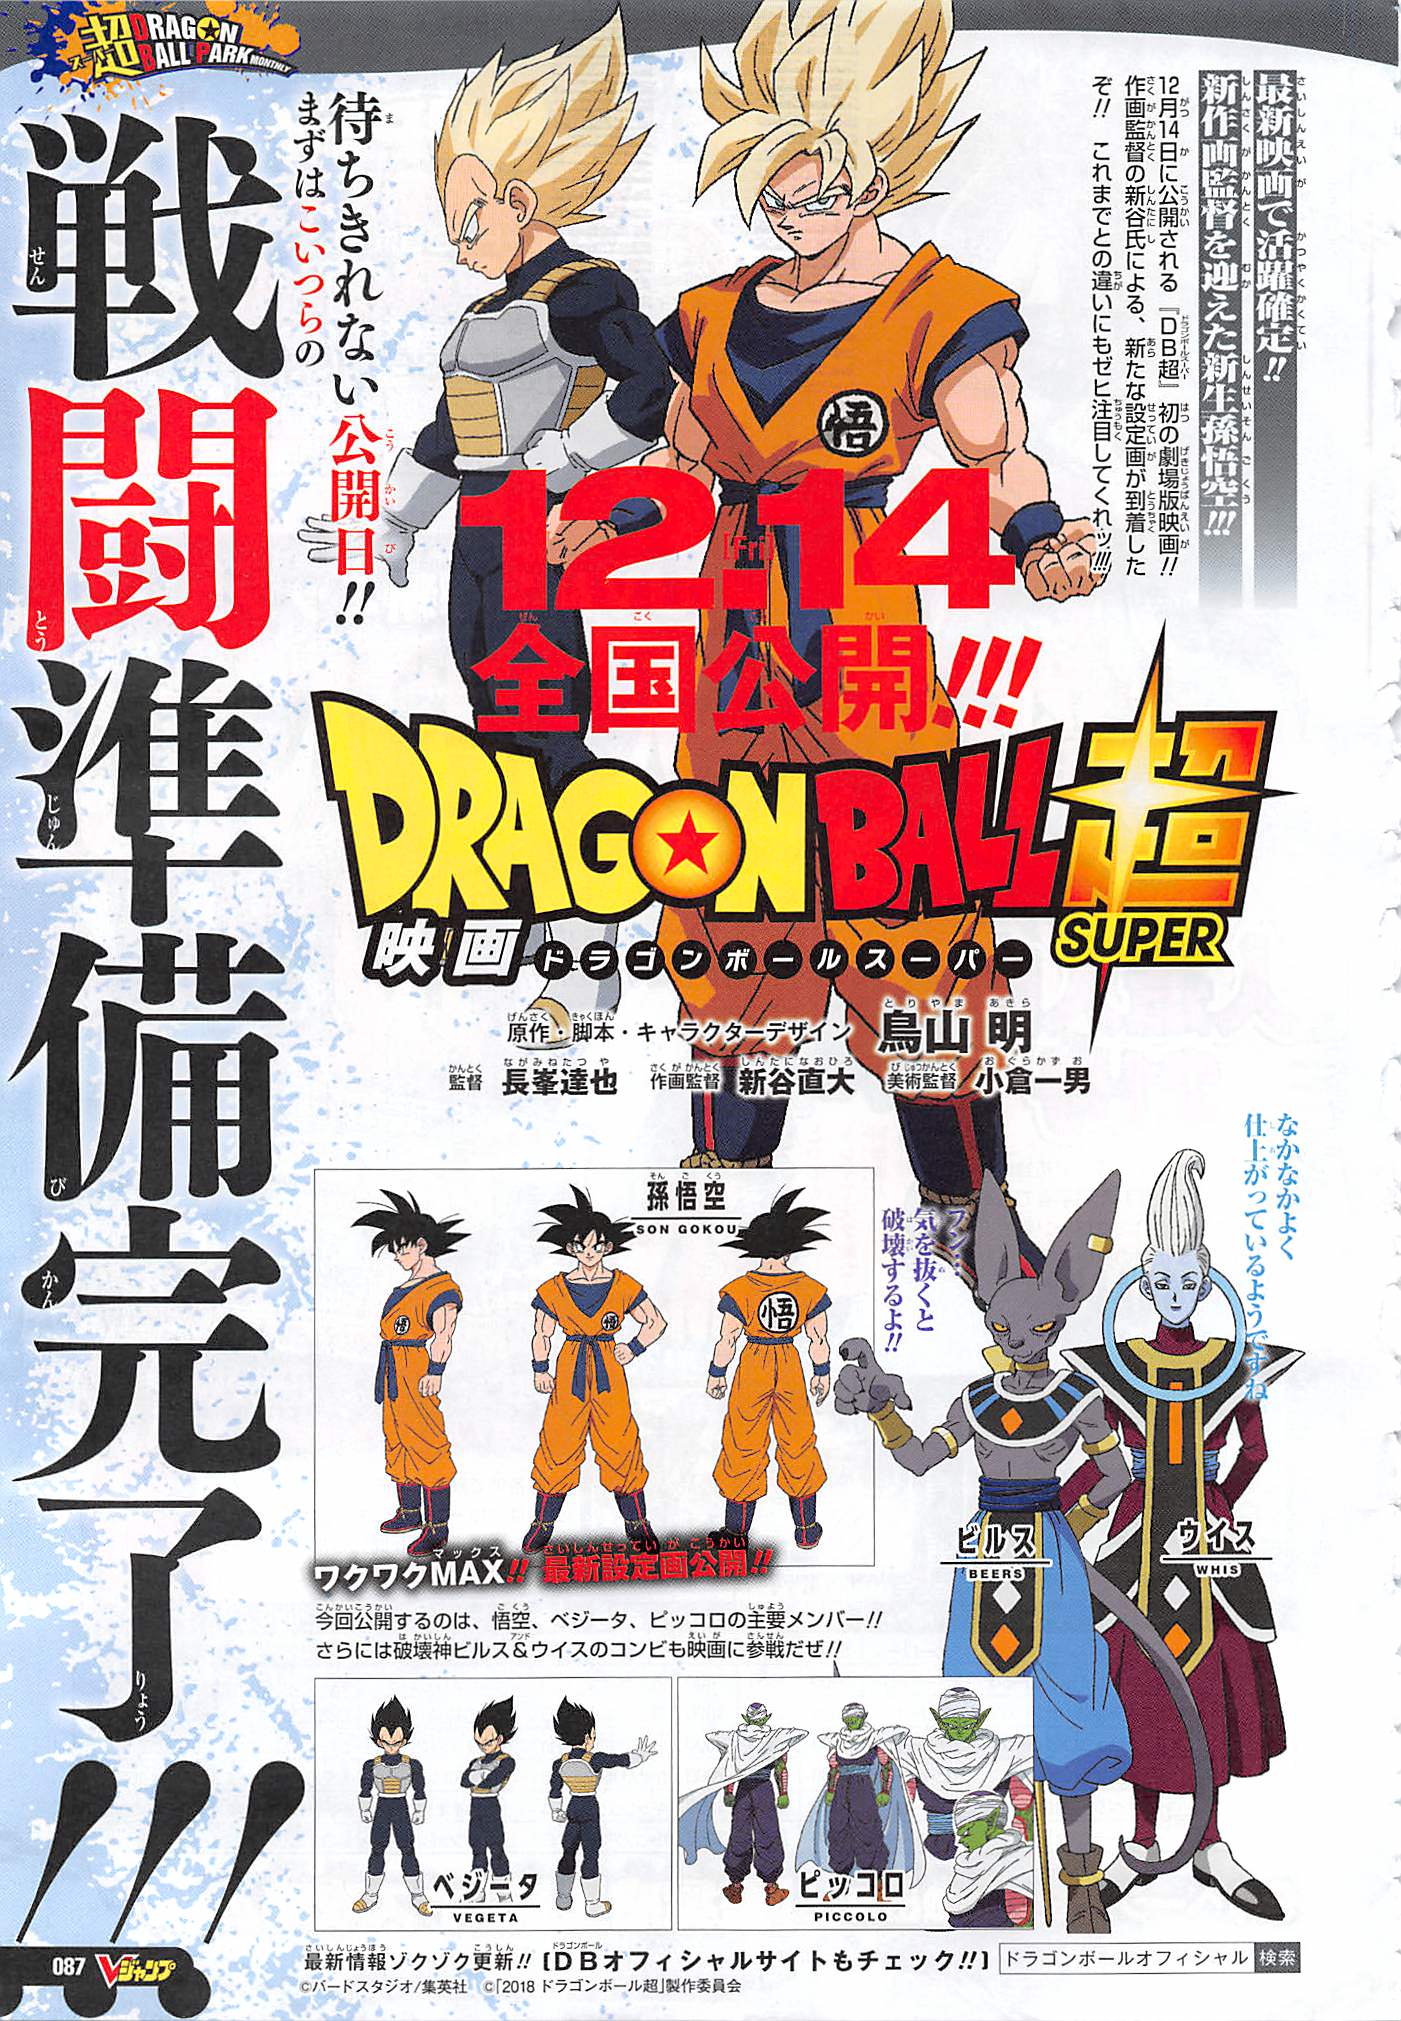 Dragon Ball Super Movie Character Designs